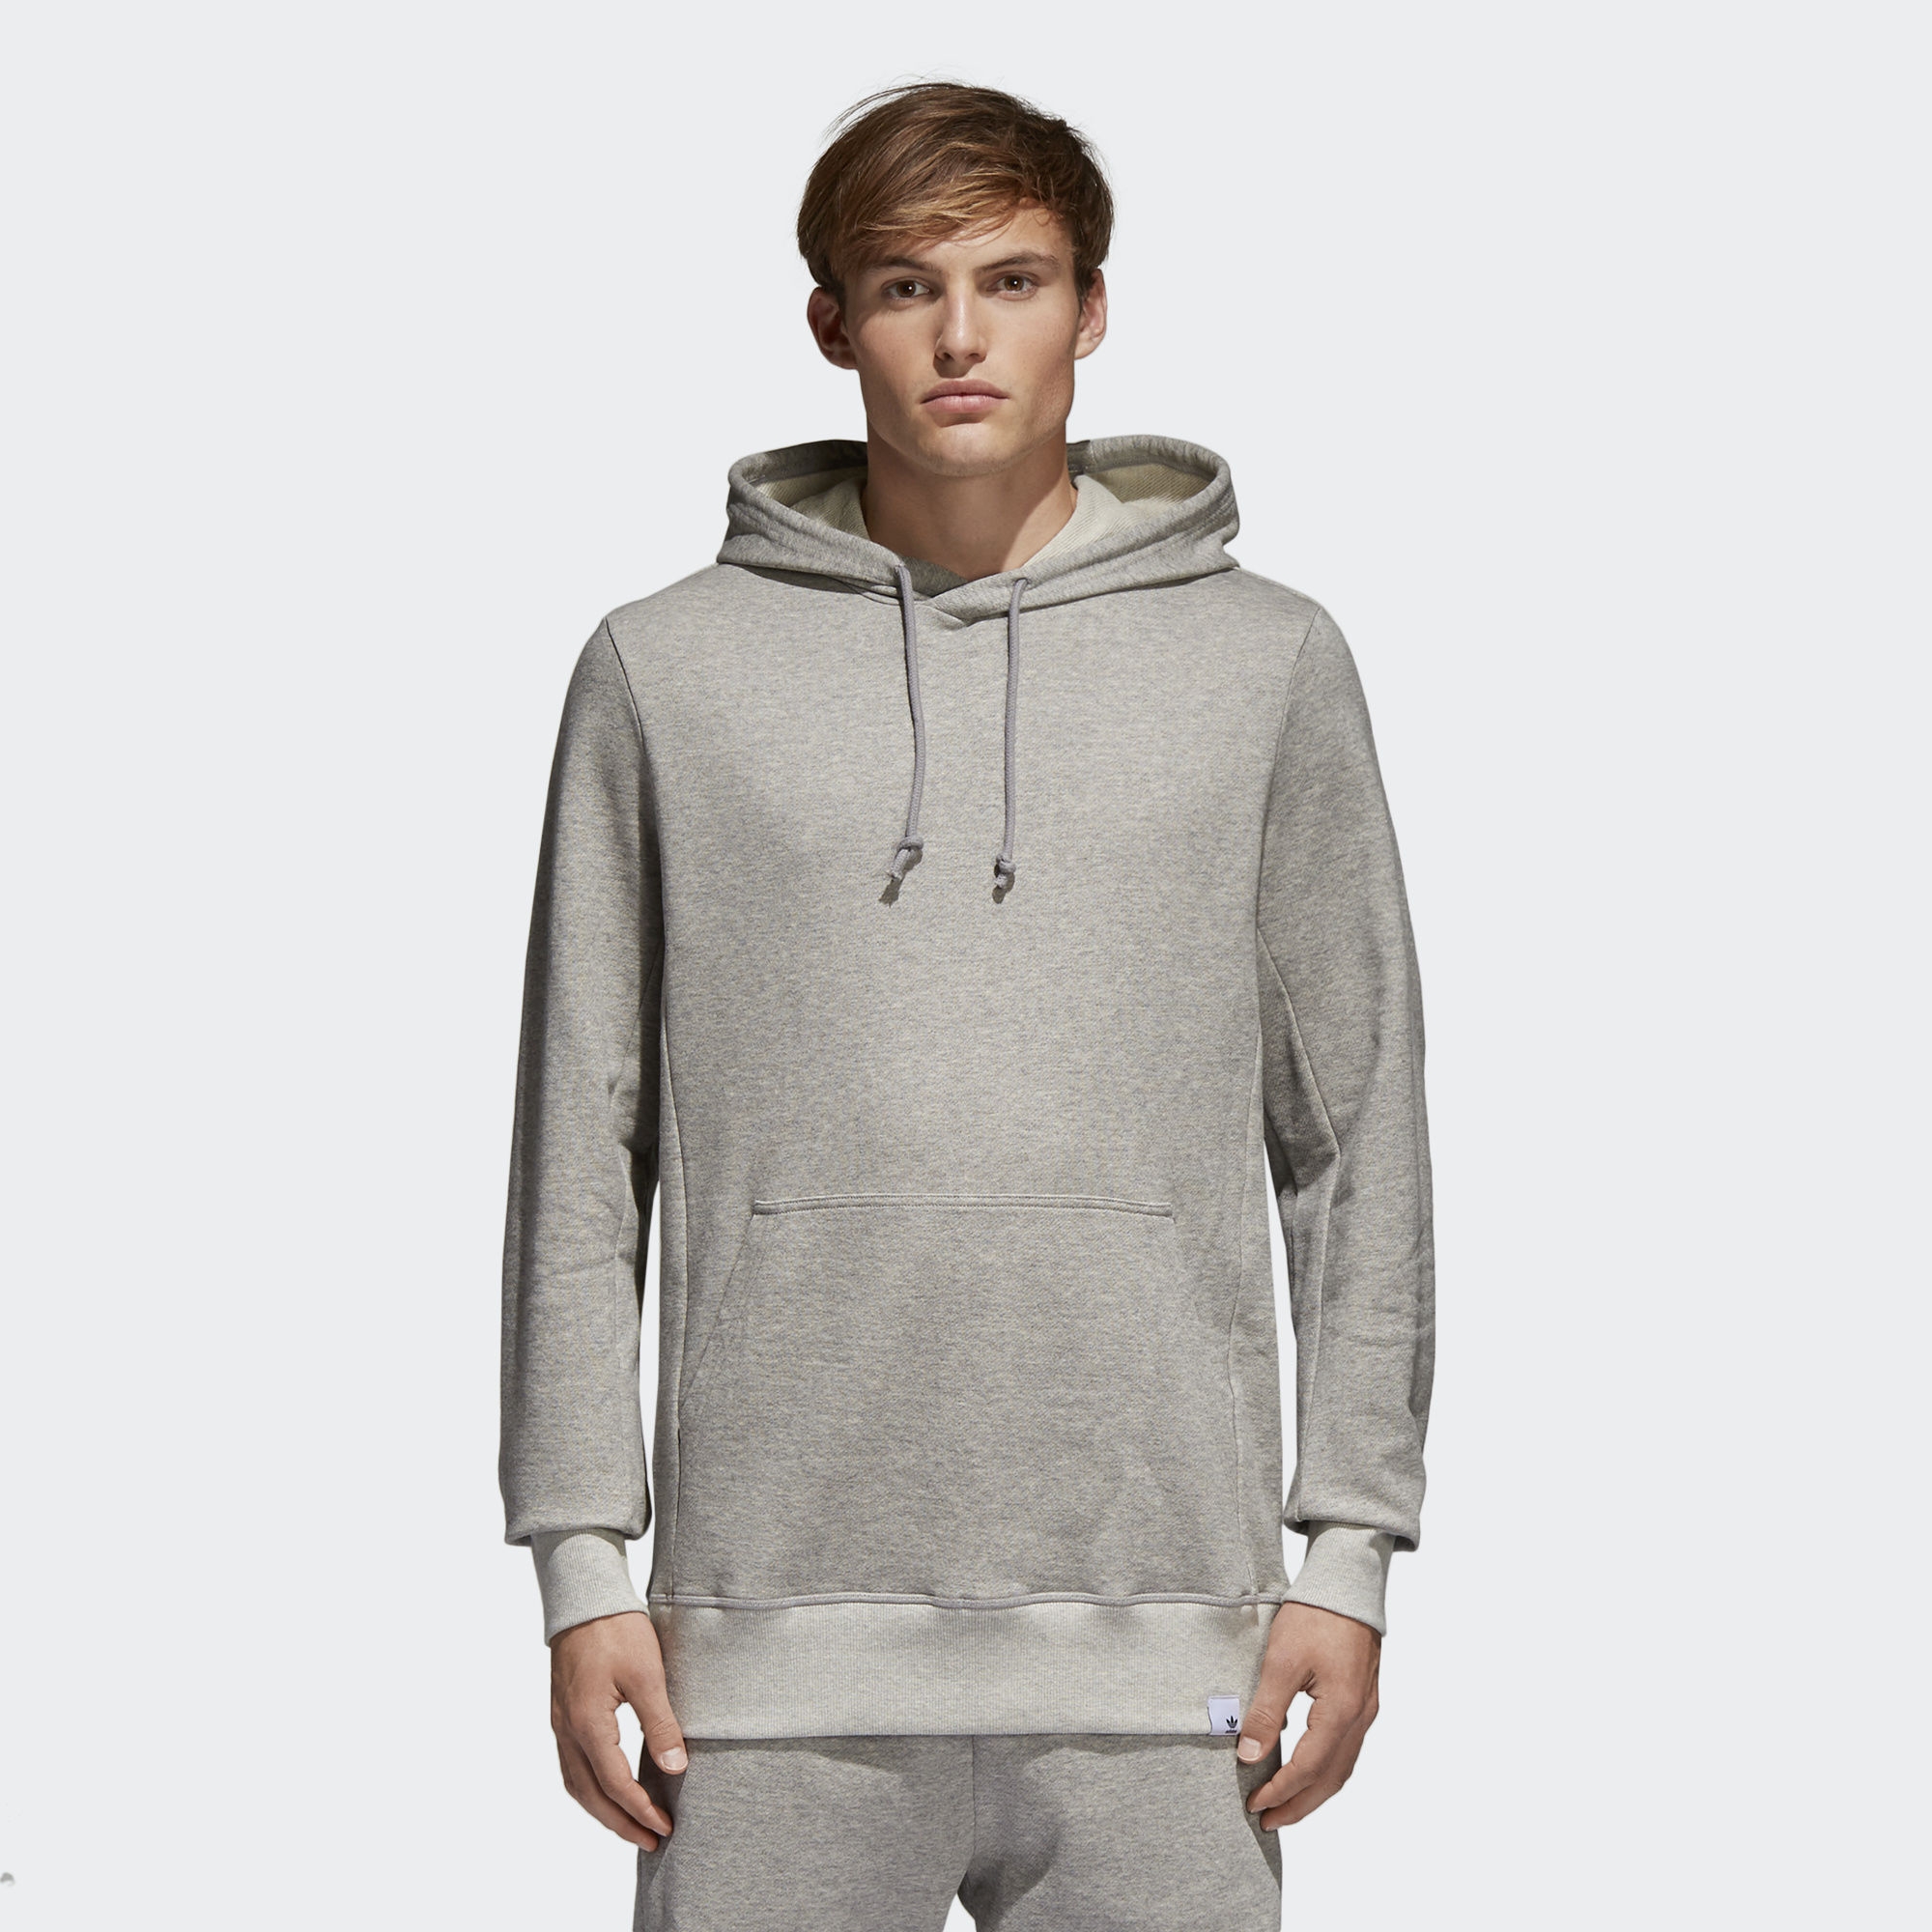 Adidas Originals x XBYO / medium grey heather